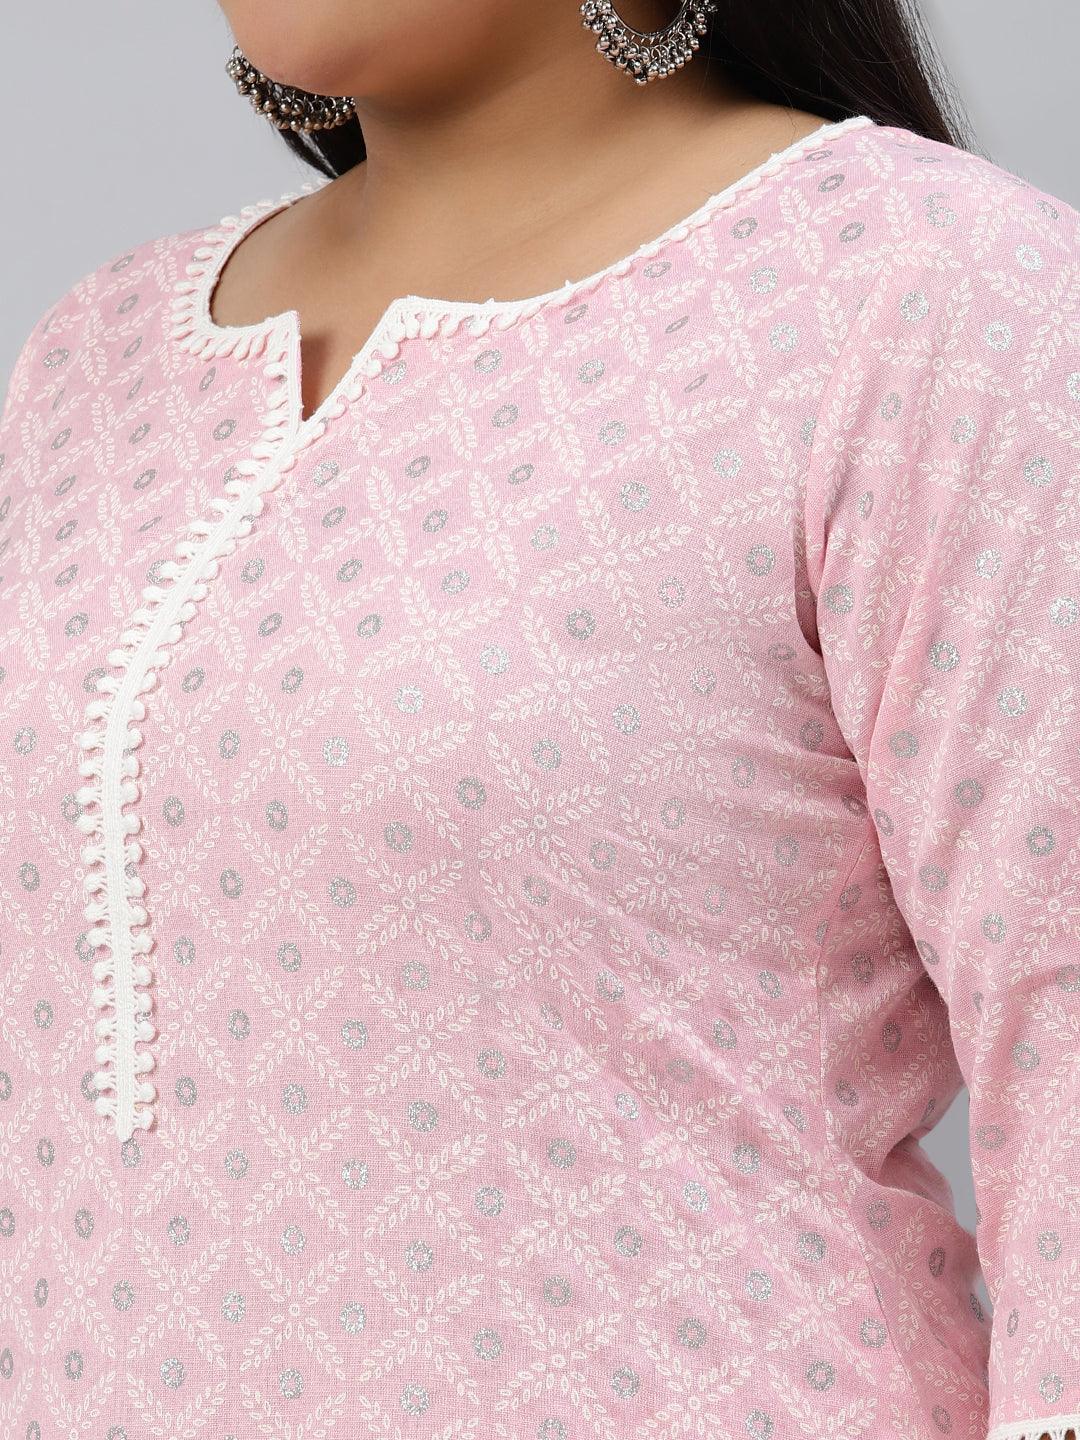 Plus Size Pink Printed Cotton Kurta - Libas